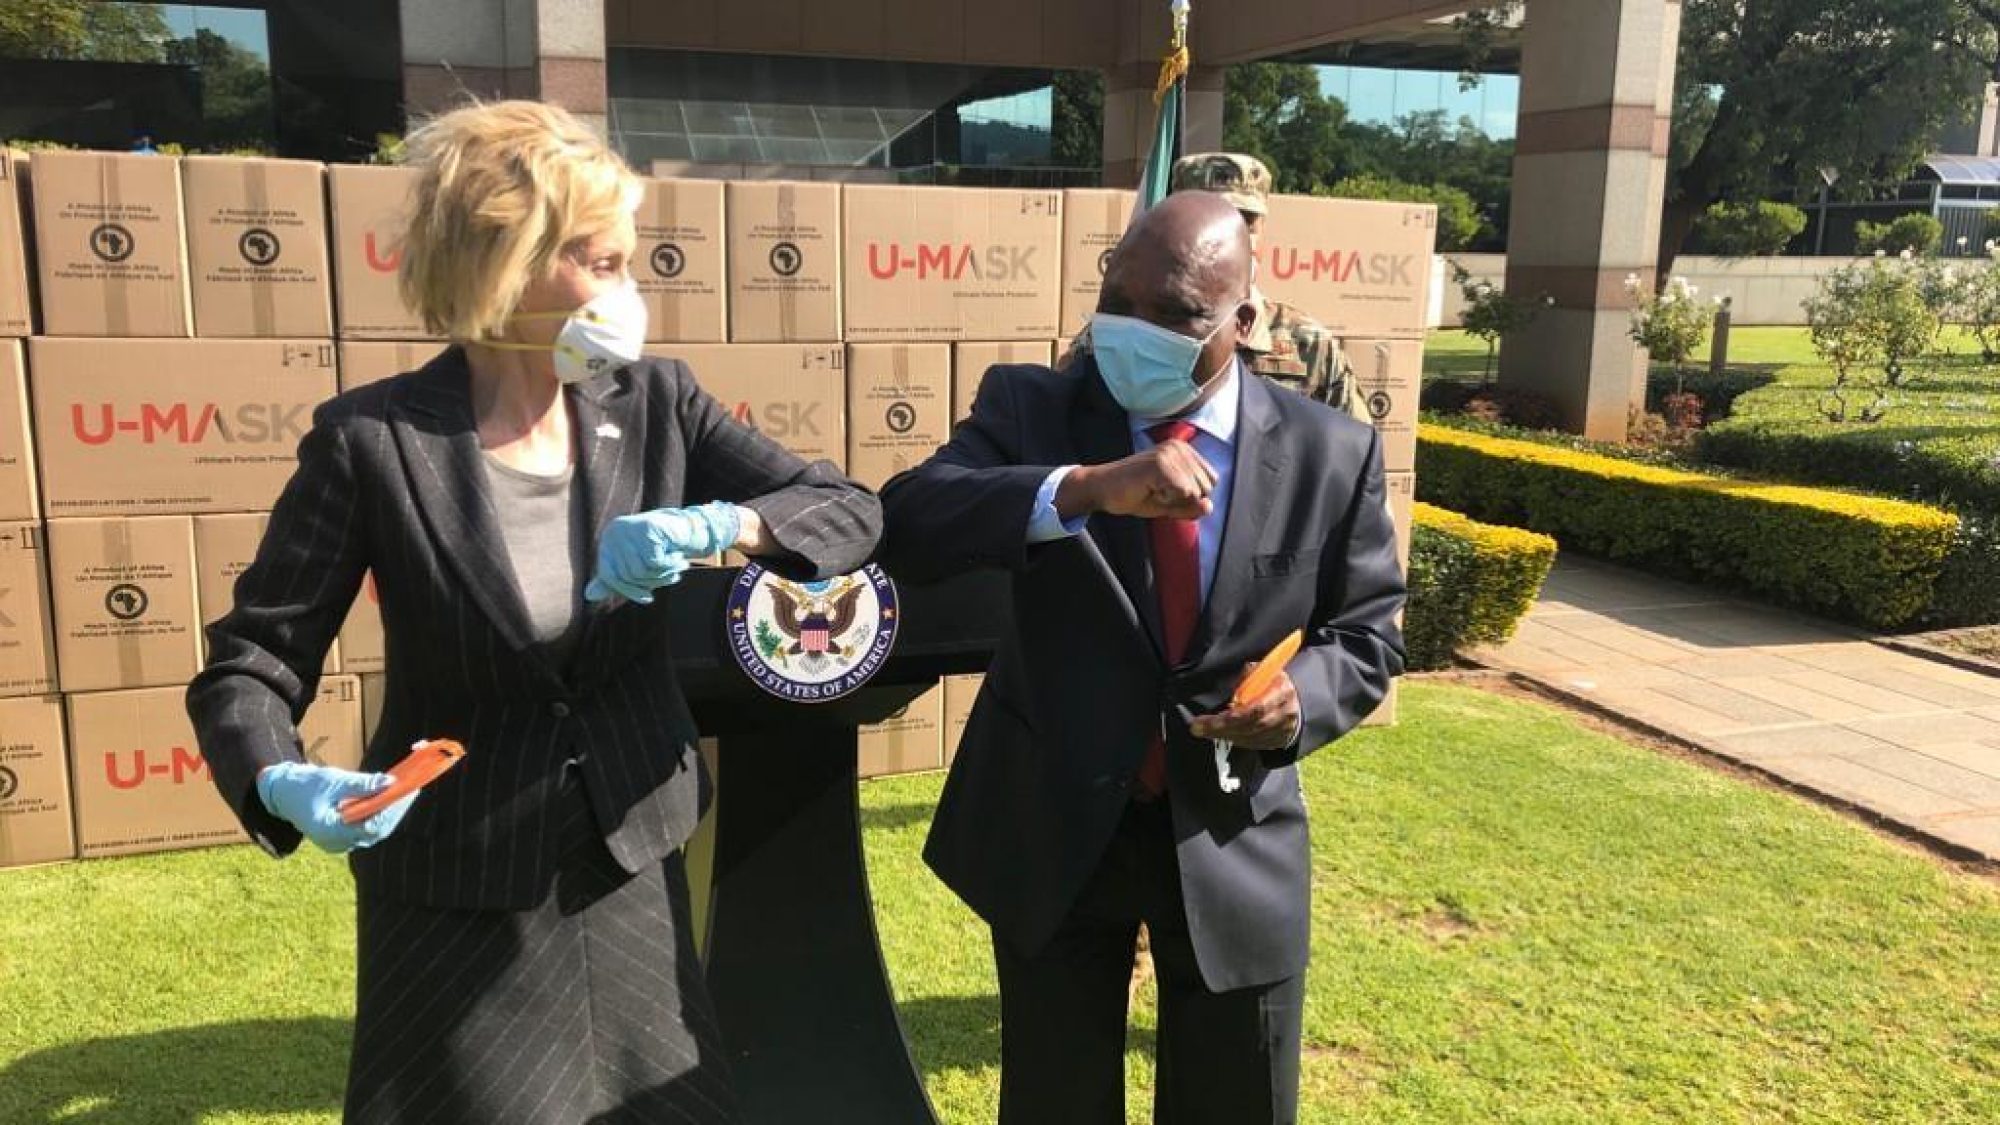 US Ambassador to South Africa helps distribute masks